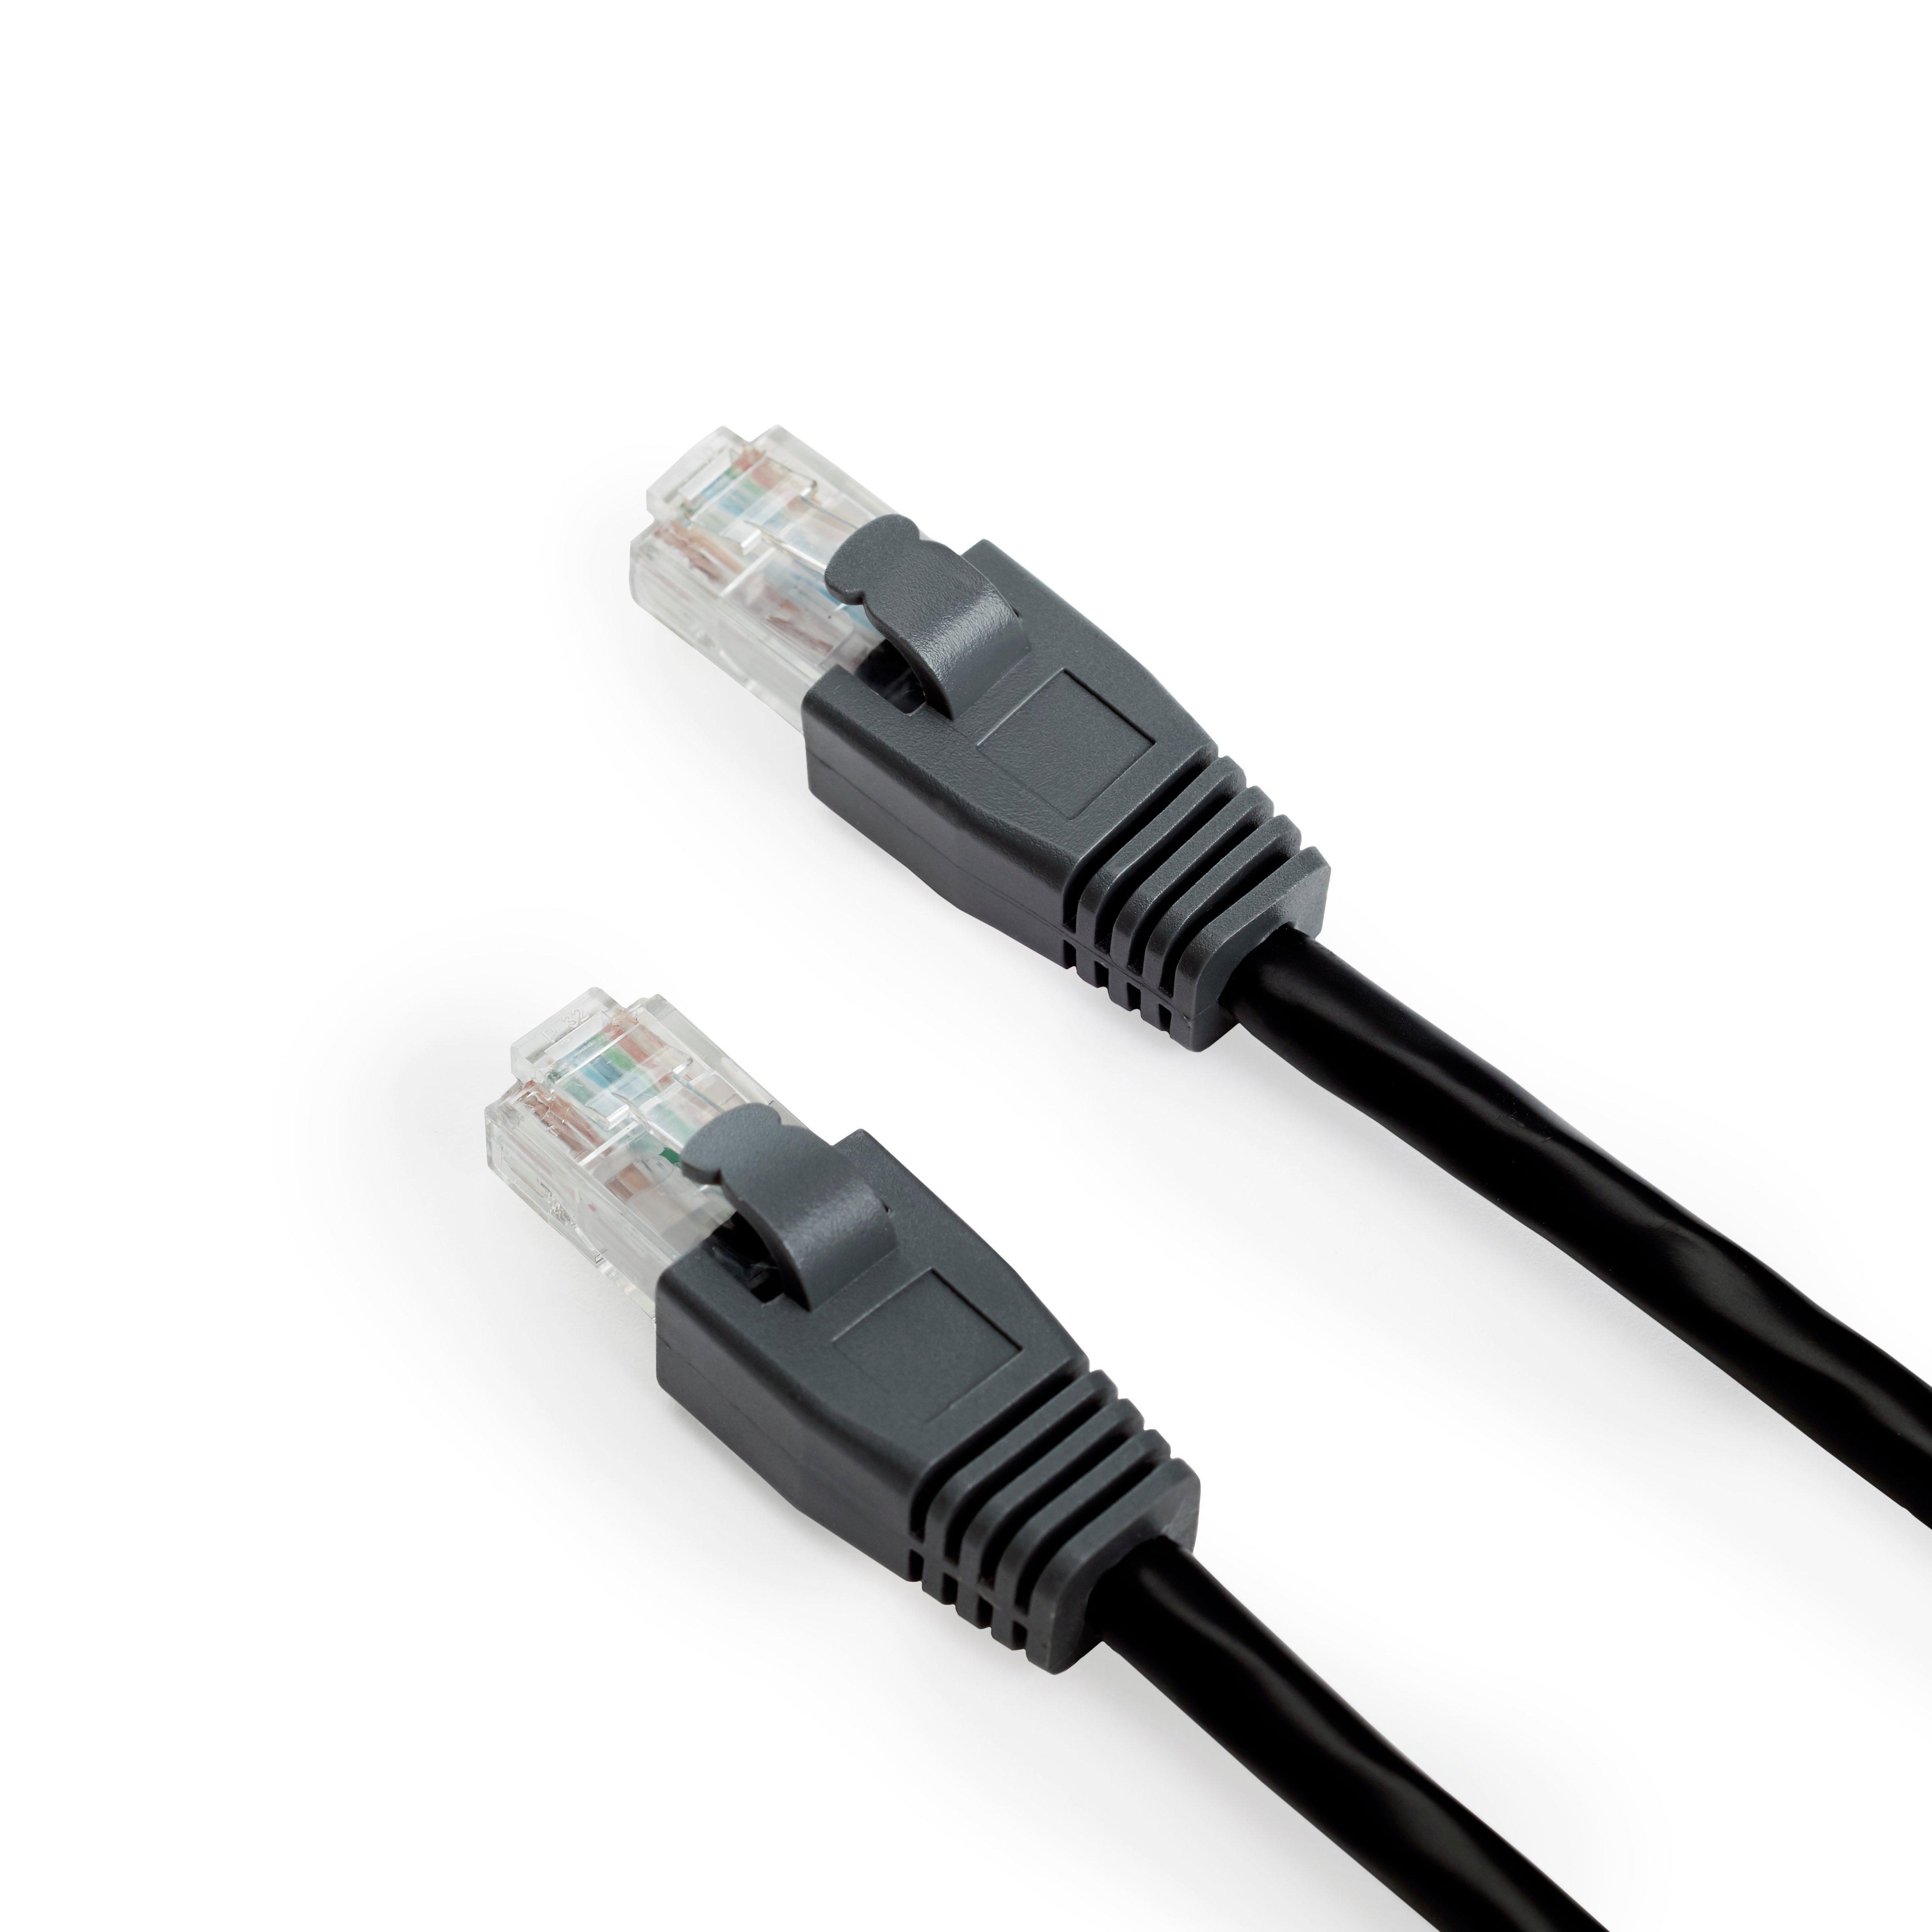 Atrix Cat6 Ethernet Cable GameStop Exclusive | GameStop